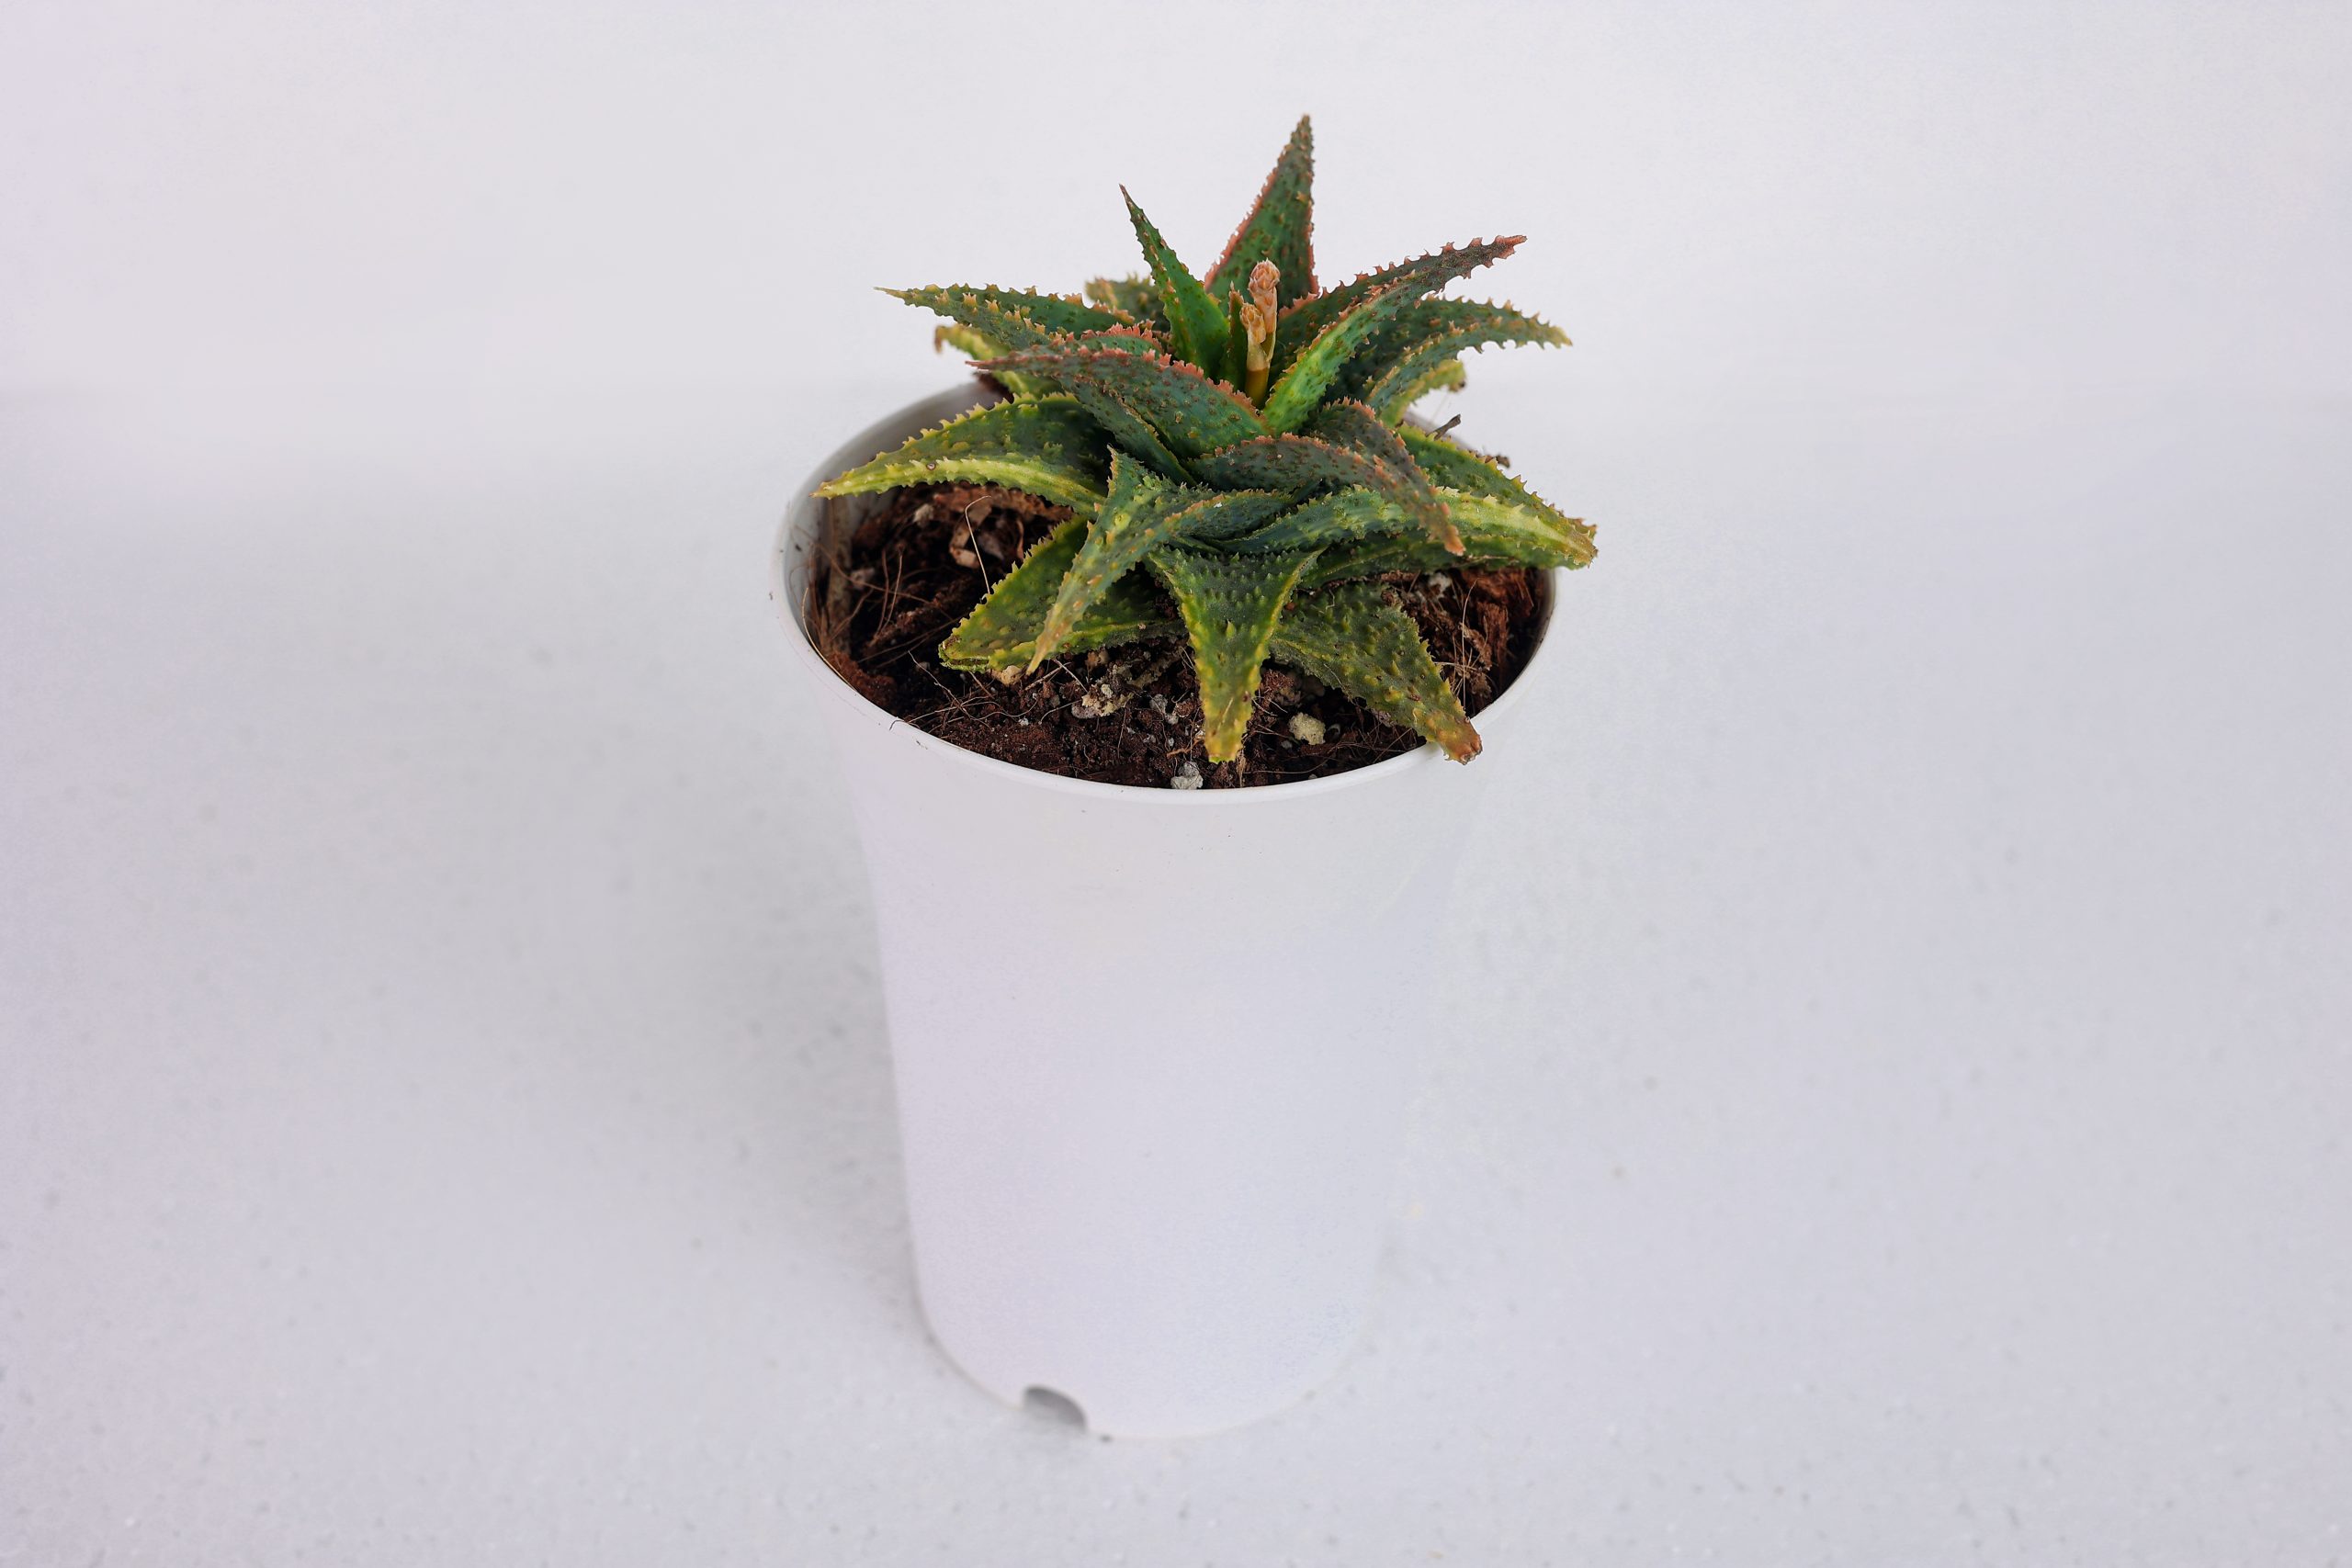 Aloe Christmas Carol succulent plant with pot